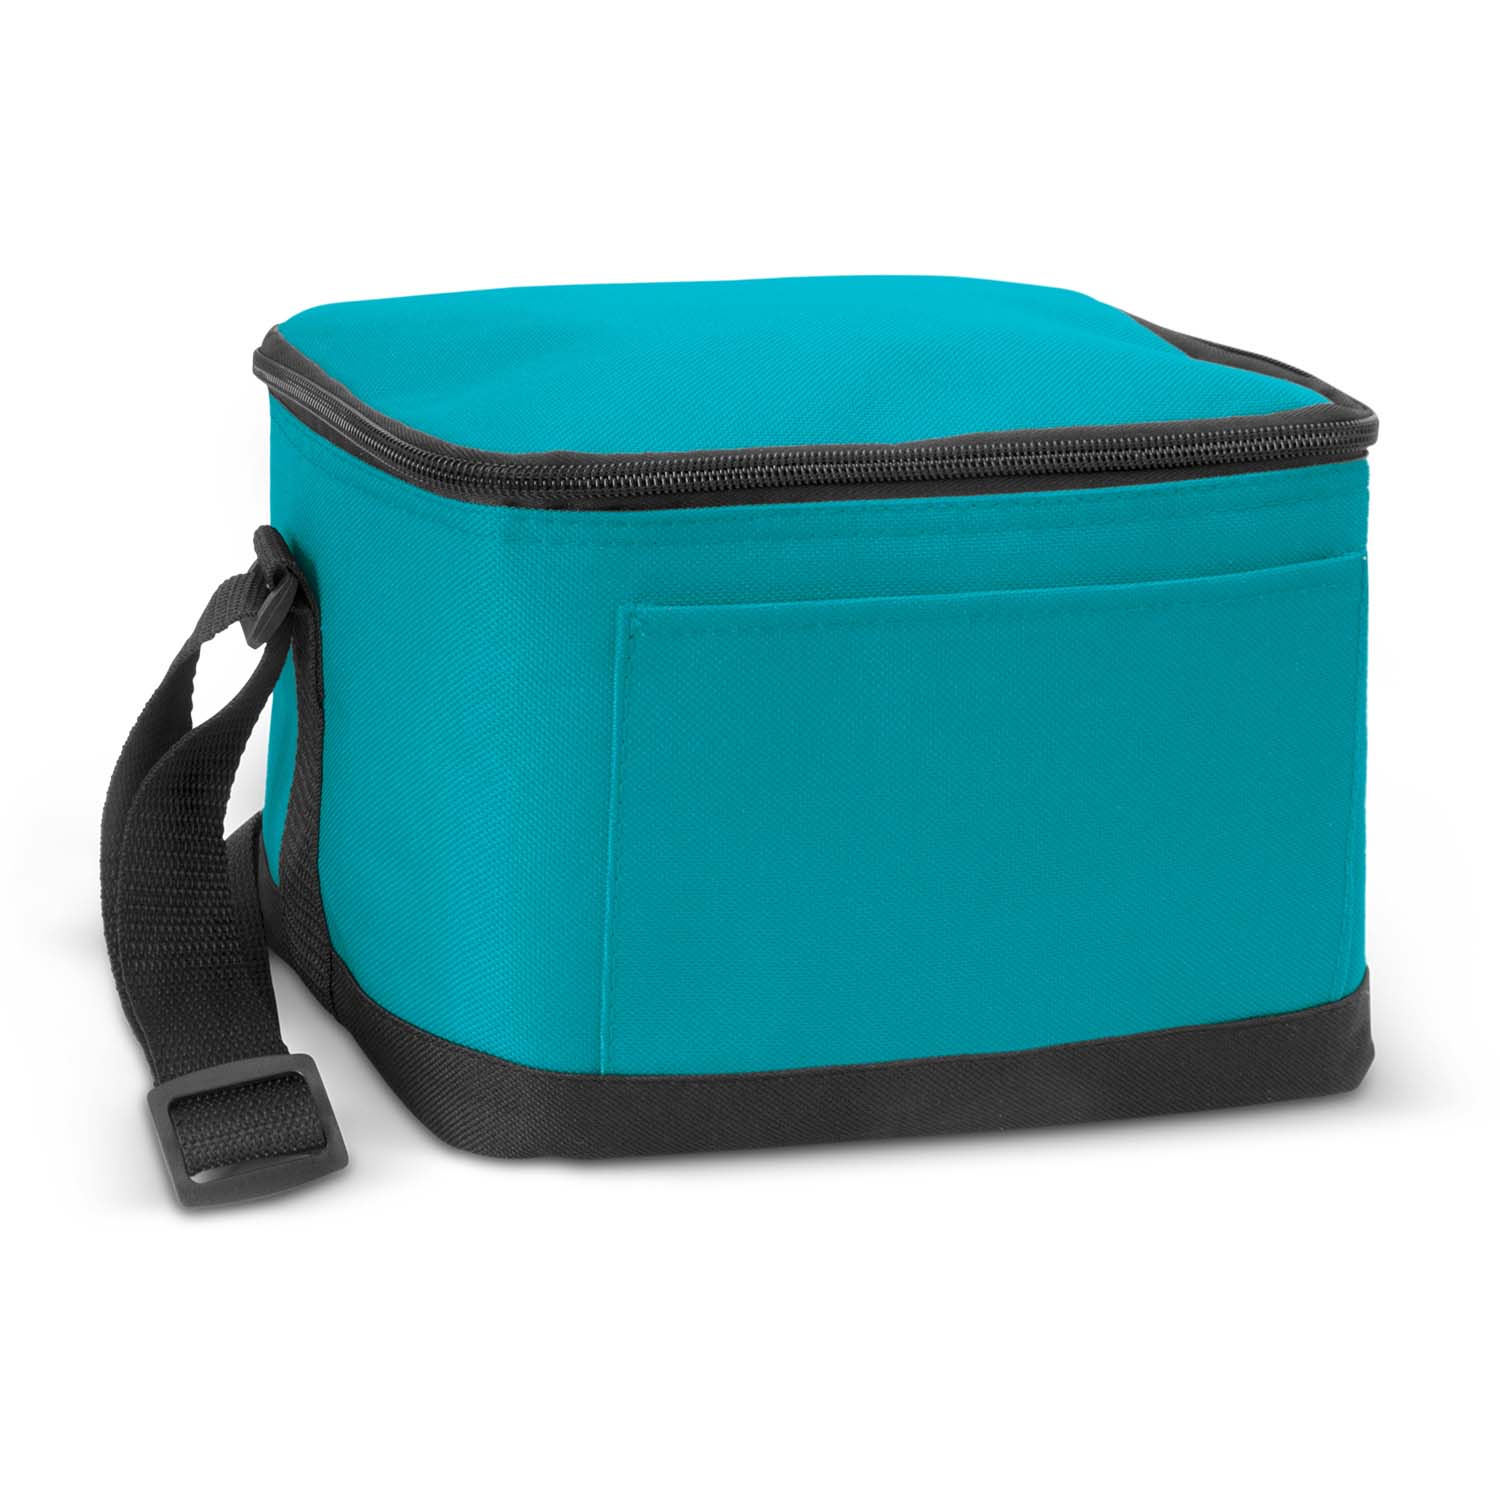 Order Light Blue Bathurst Cooler Bags Online in Perth